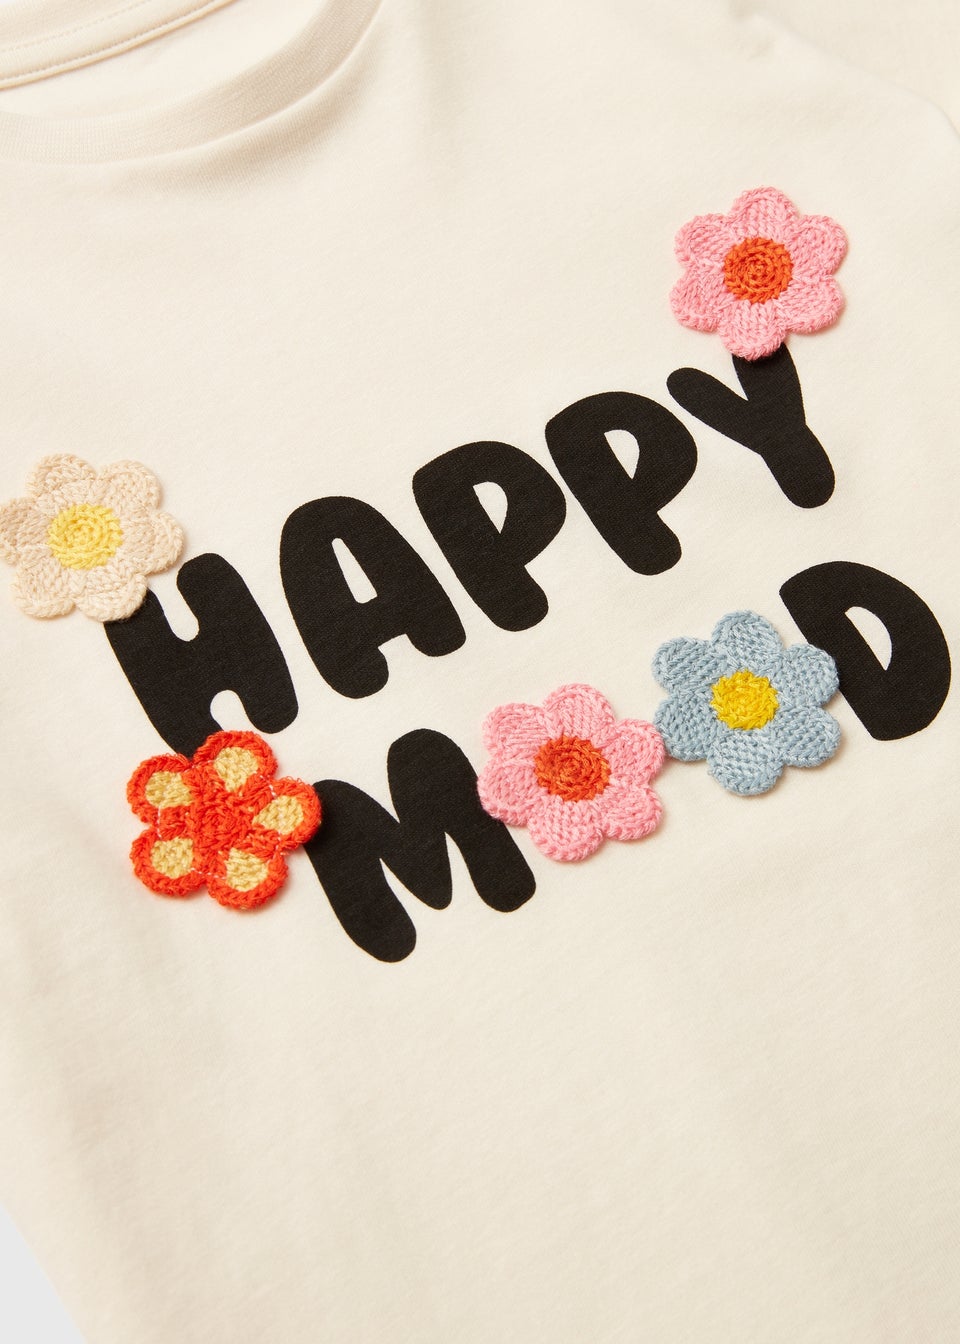 Girls Cream Happy Mood T-Shirt (1-7yrs)